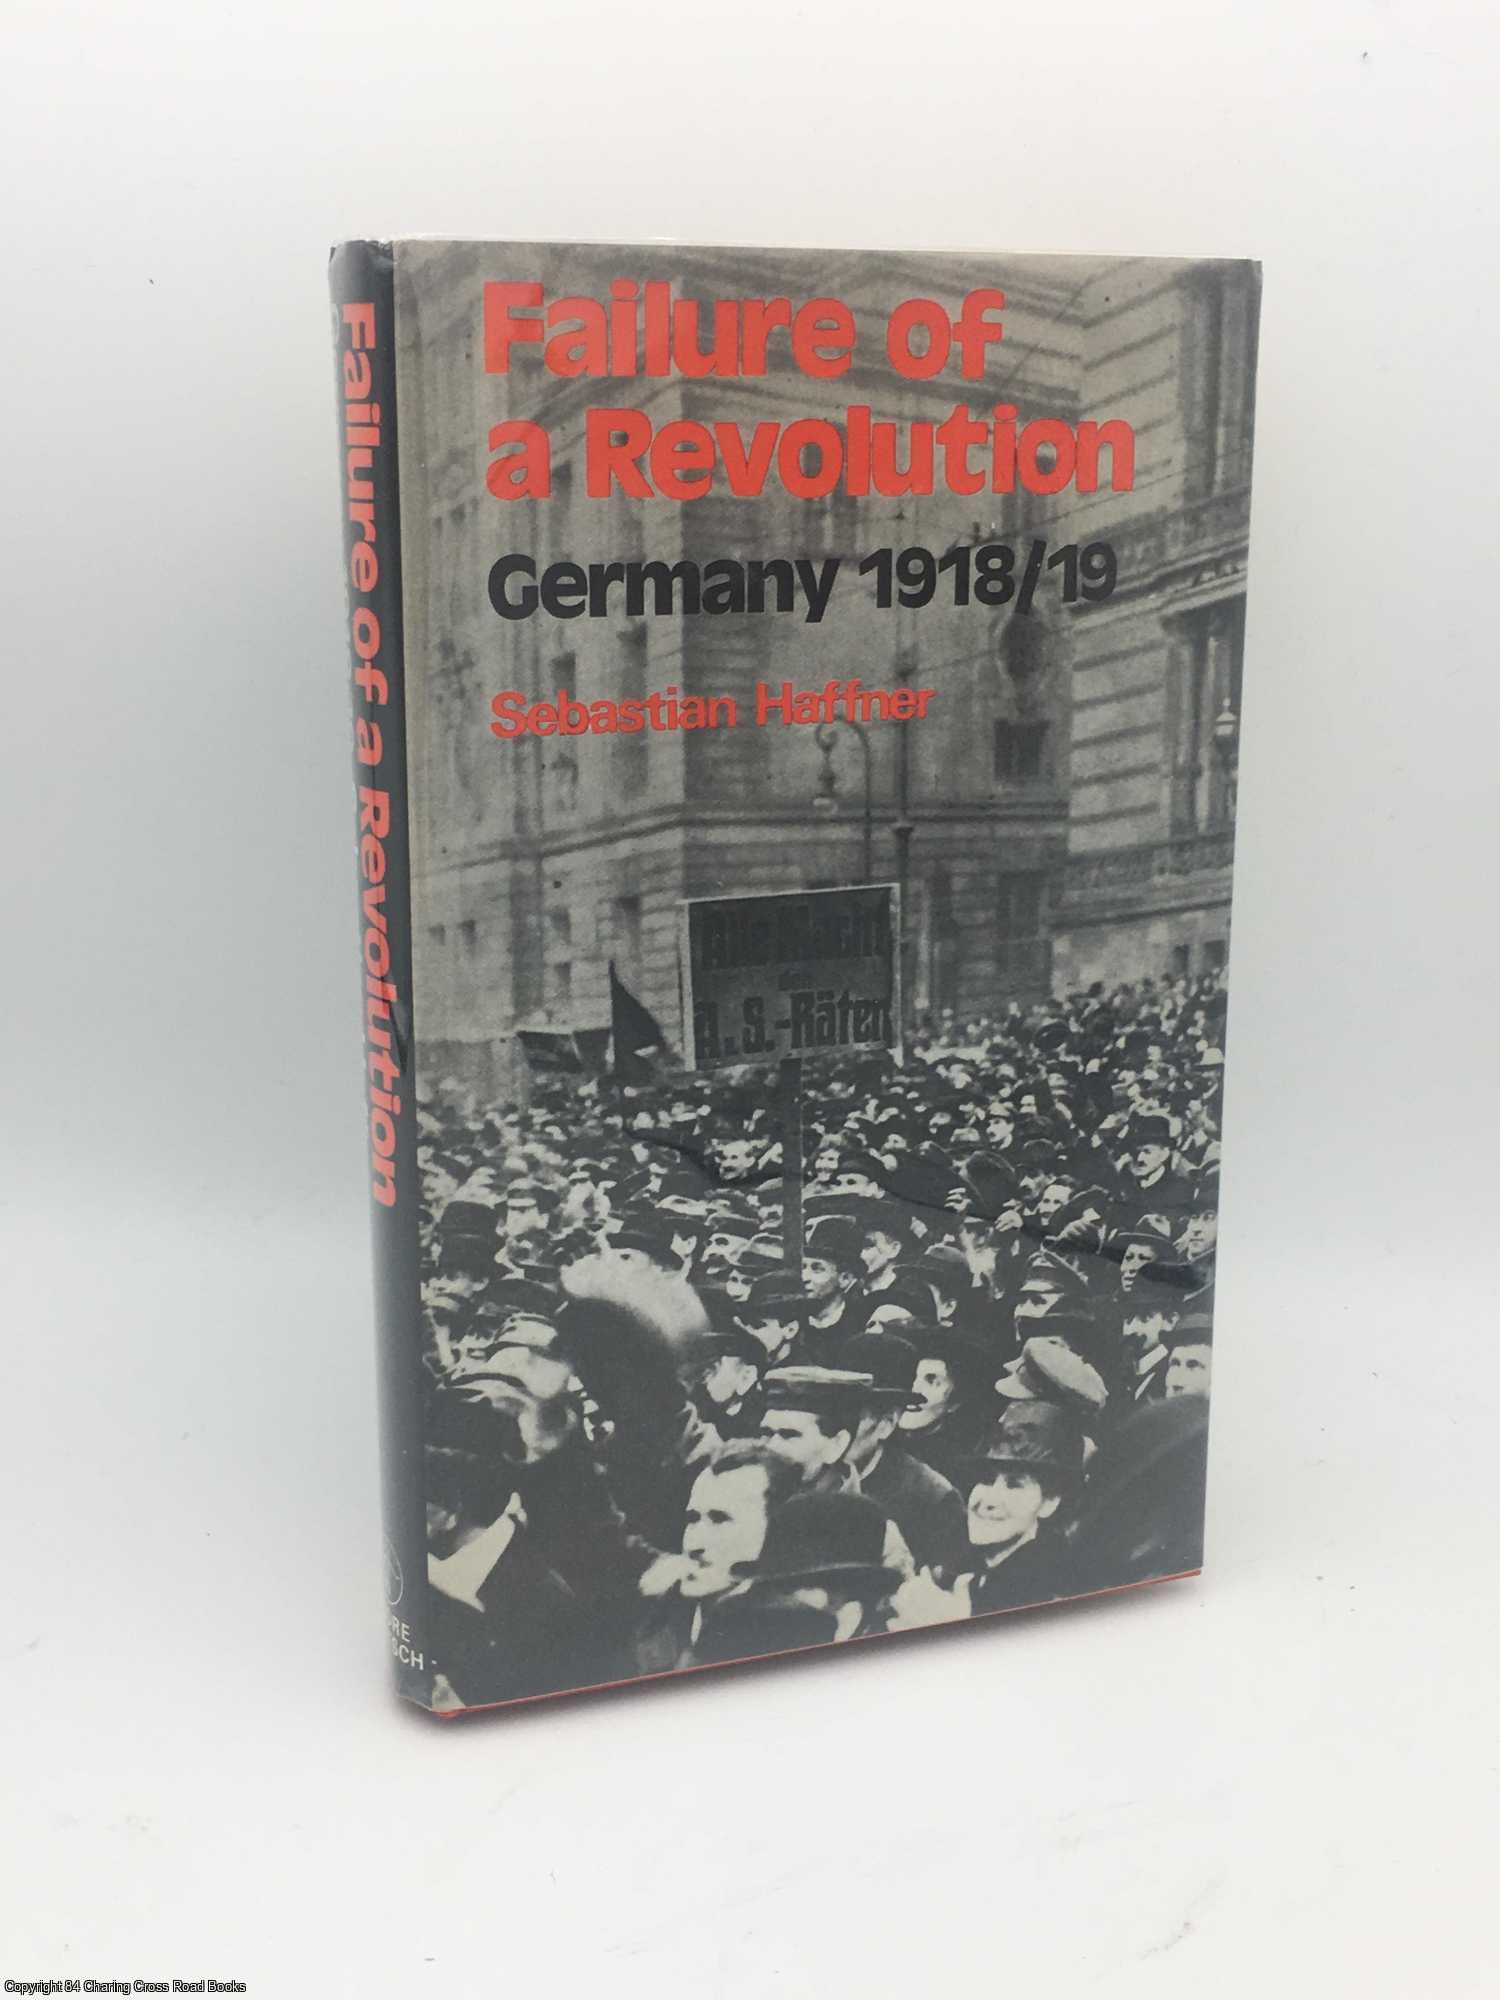 Haffner, Sebastian - Failure of a Revolution: Germany, 1918-19